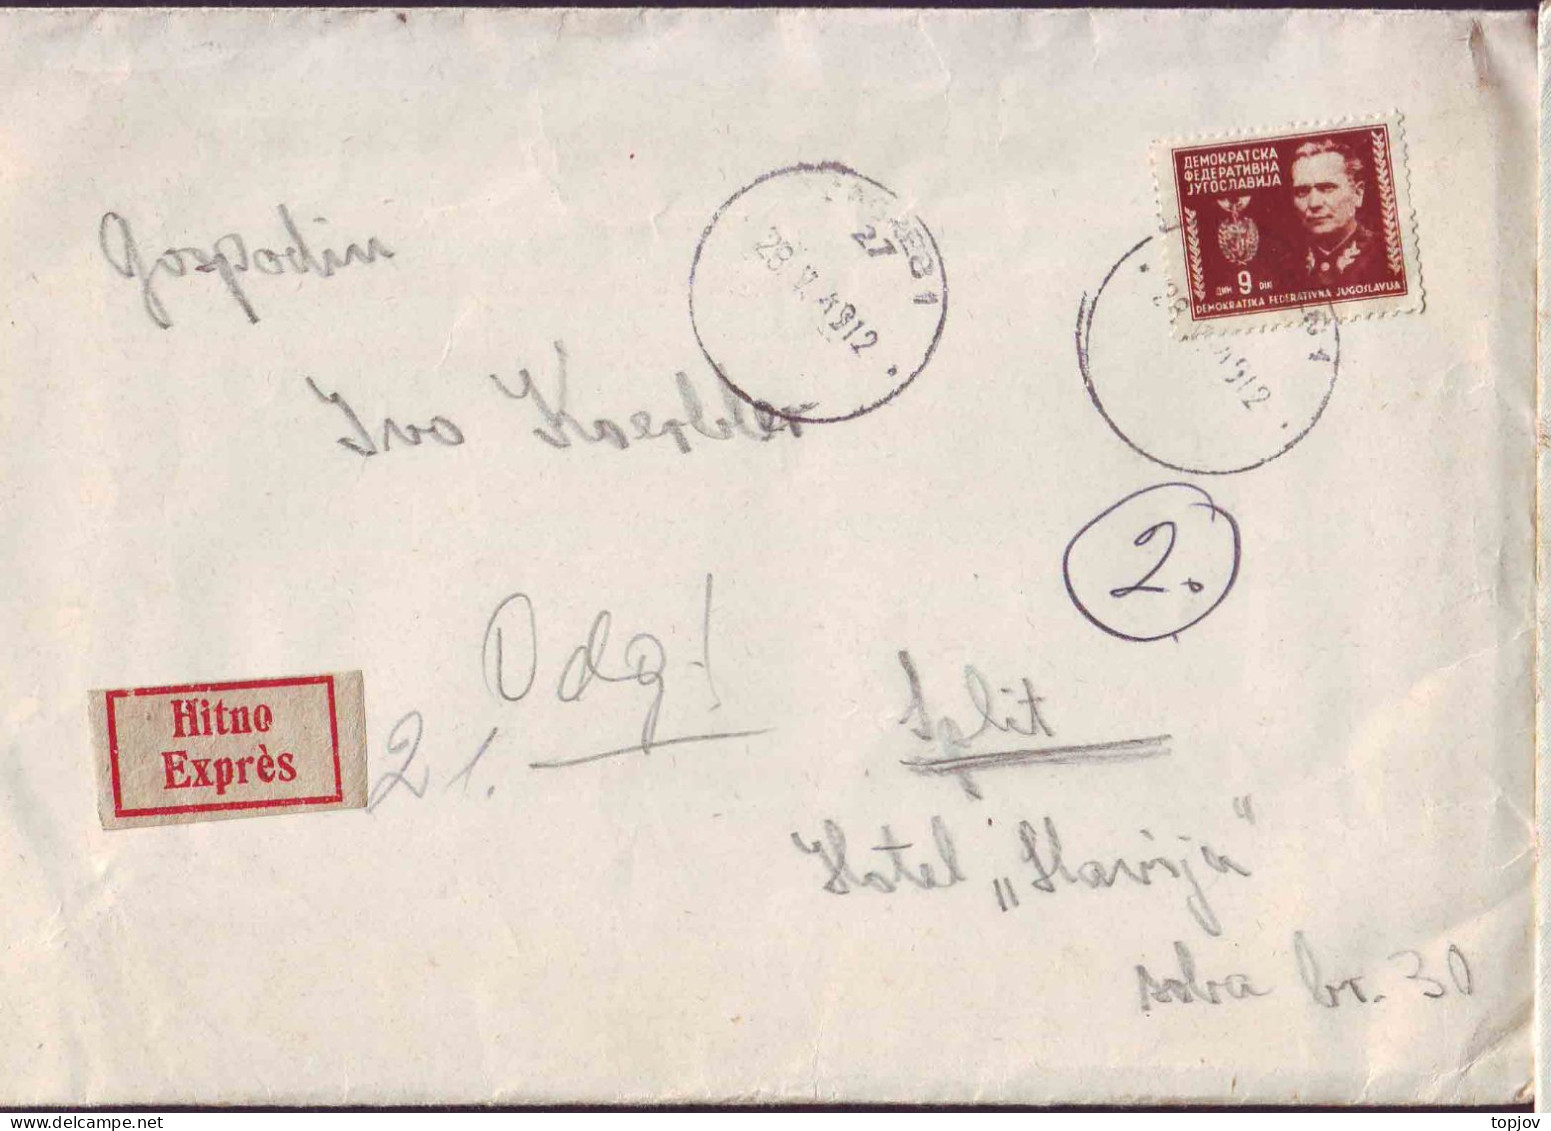 JUGOSLAVIA - EXPRES. Letter  9din TITO  On Yellow Paper  BANJA LUKA To ZAGREB - 1949 - Posta Aerea